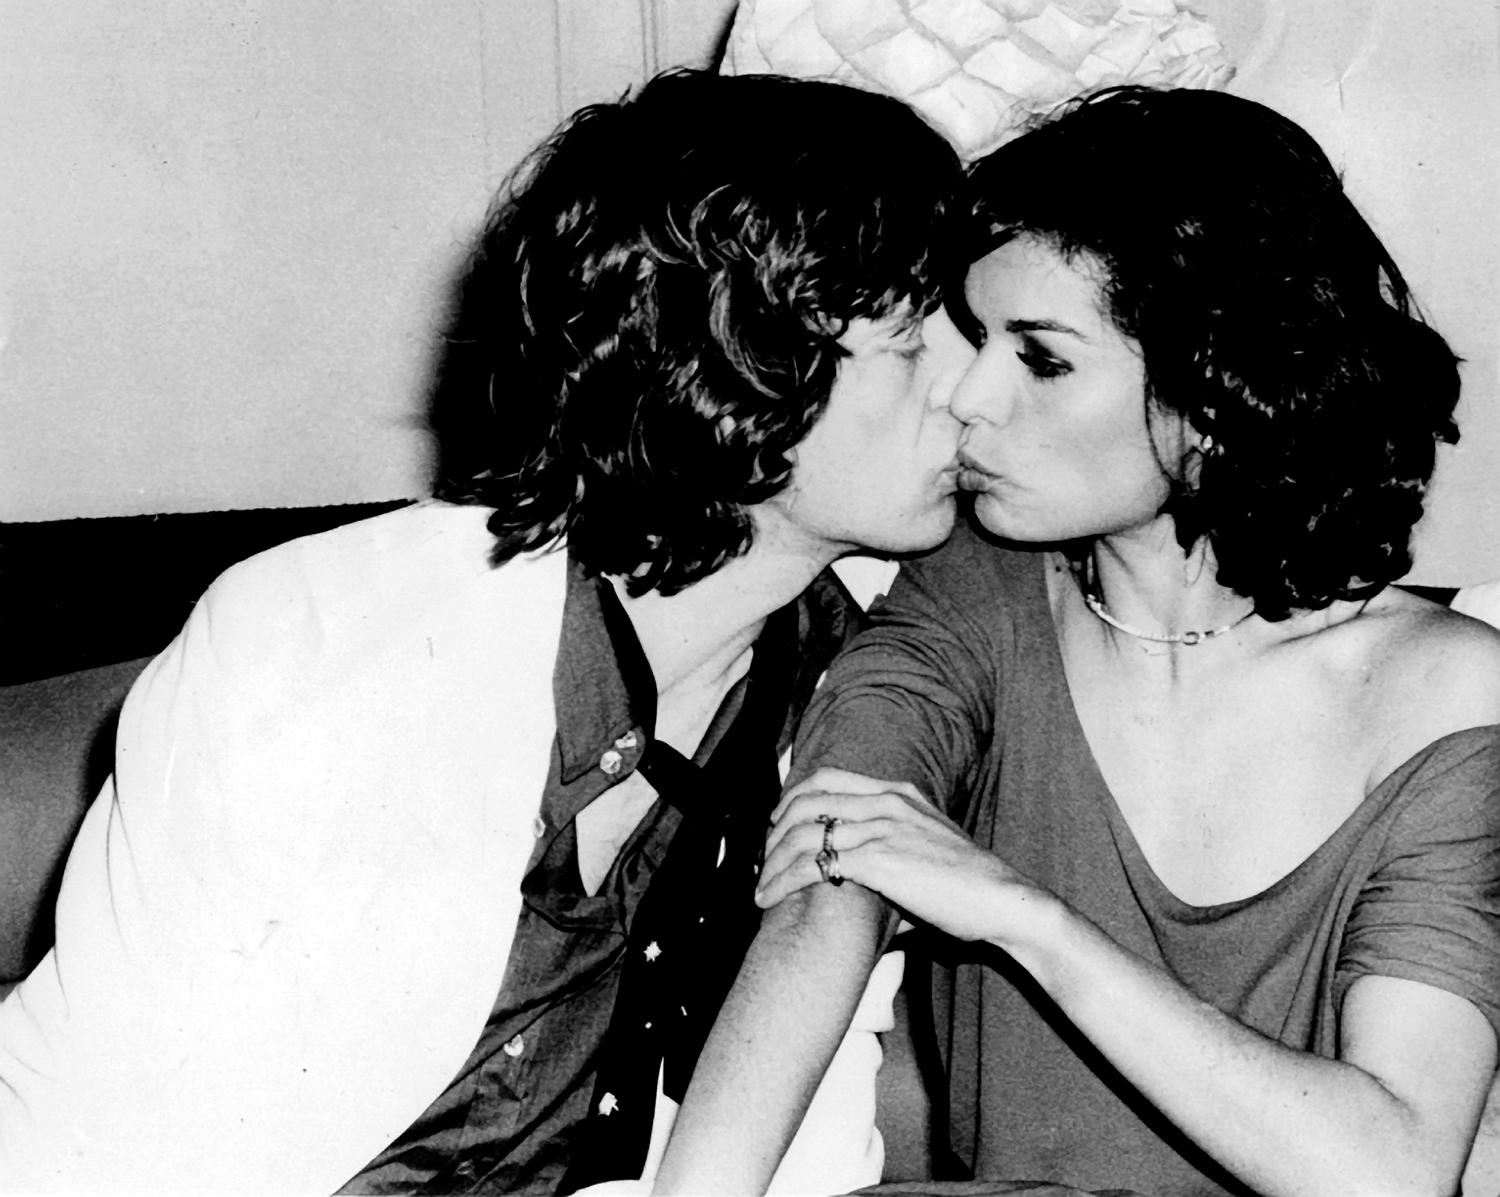 Rose Hartman Black and White Photograph - Mick and Bianca Jagger, Studio 54, New York, 1977